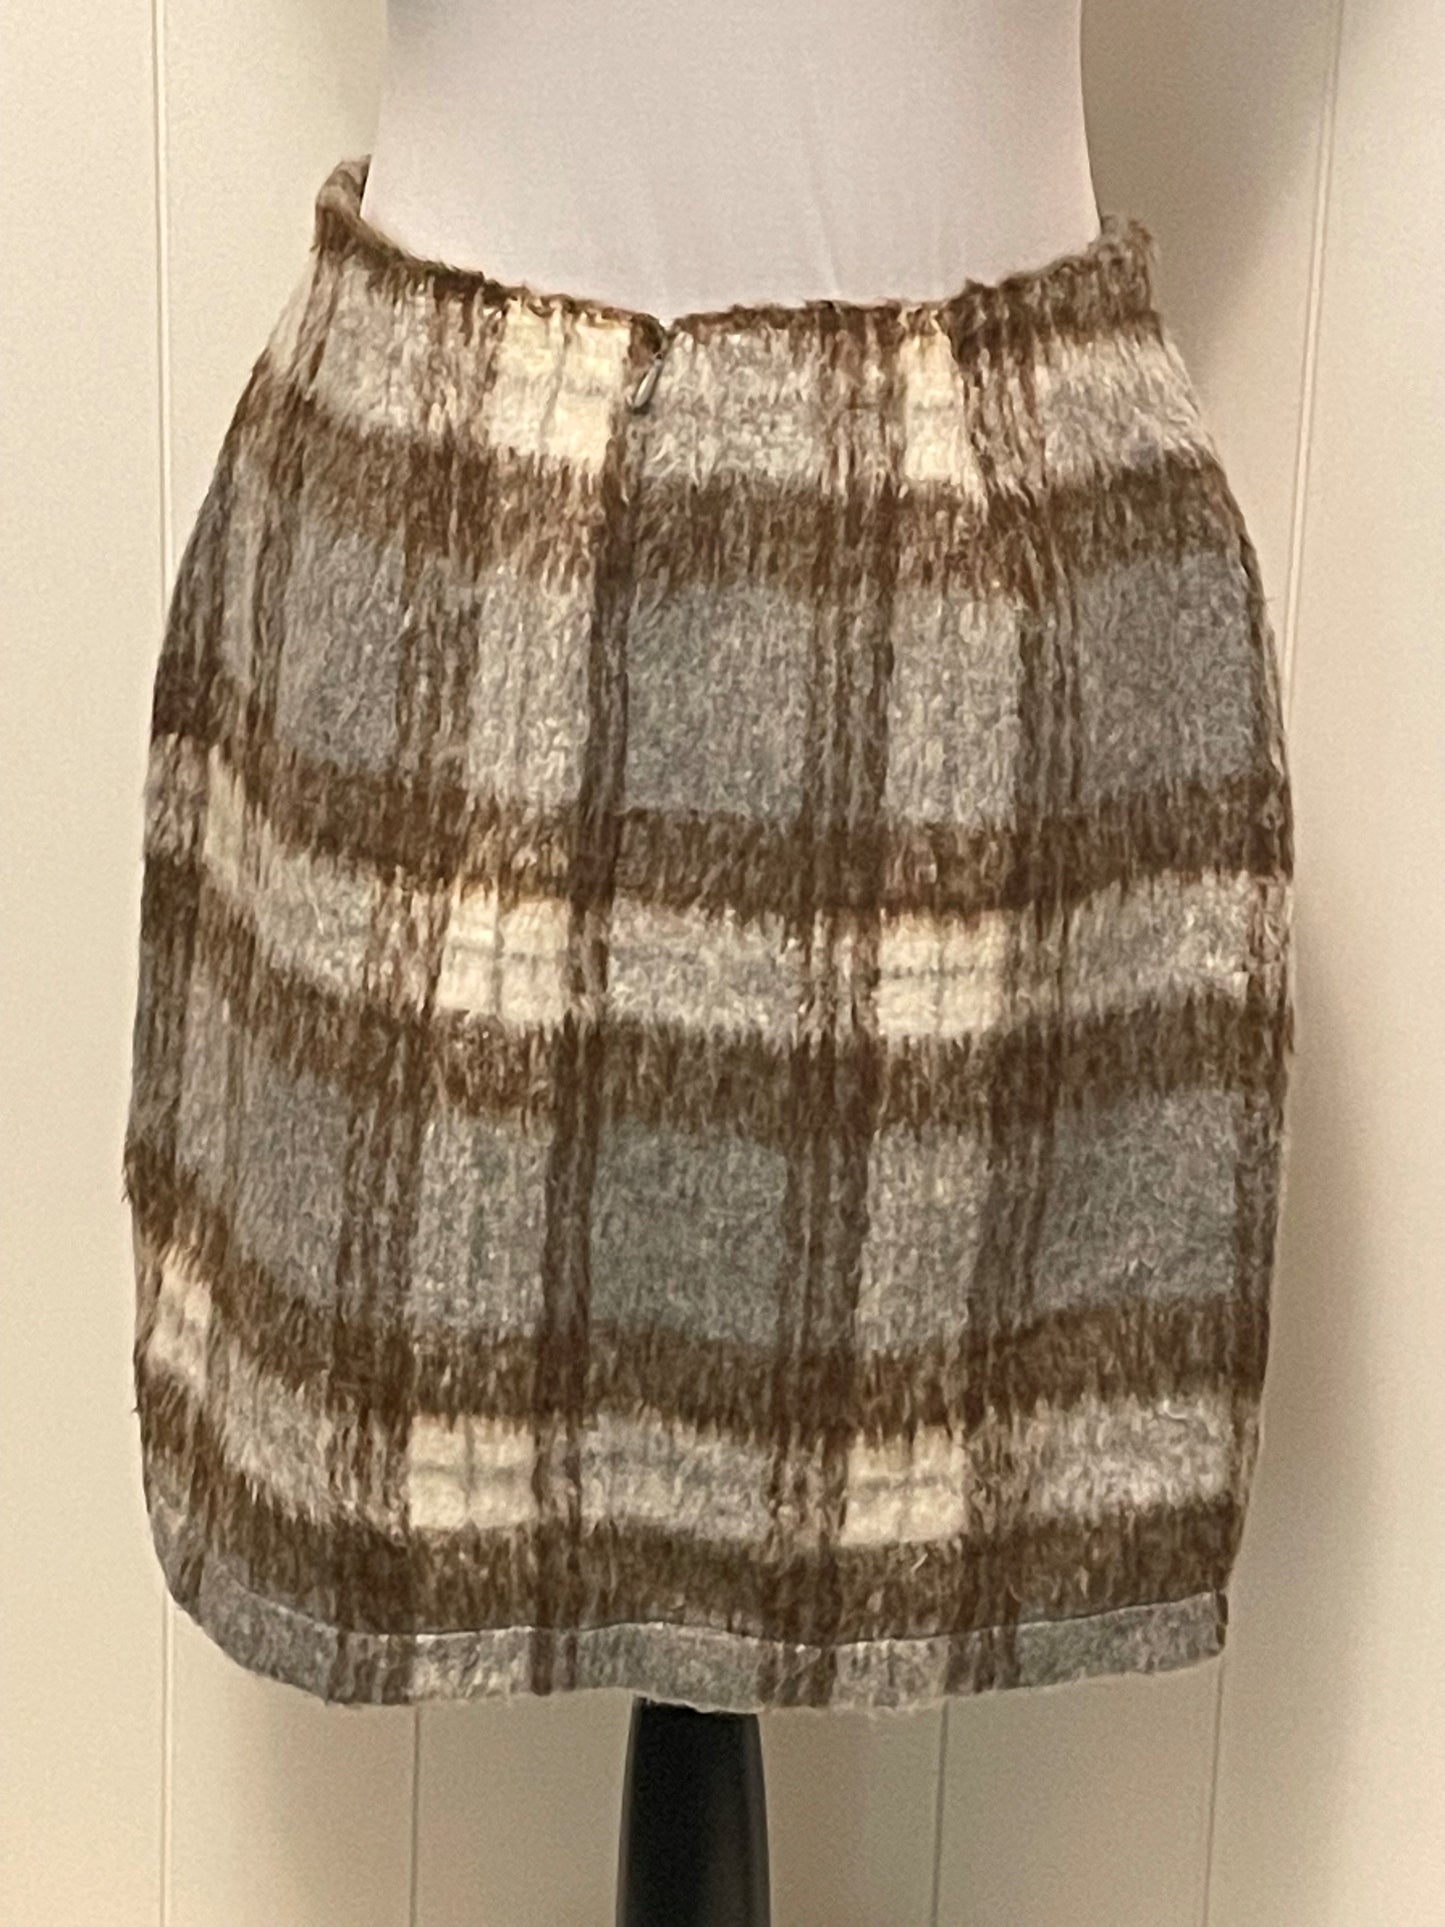 Size 6 - Boston Proper wool skirt